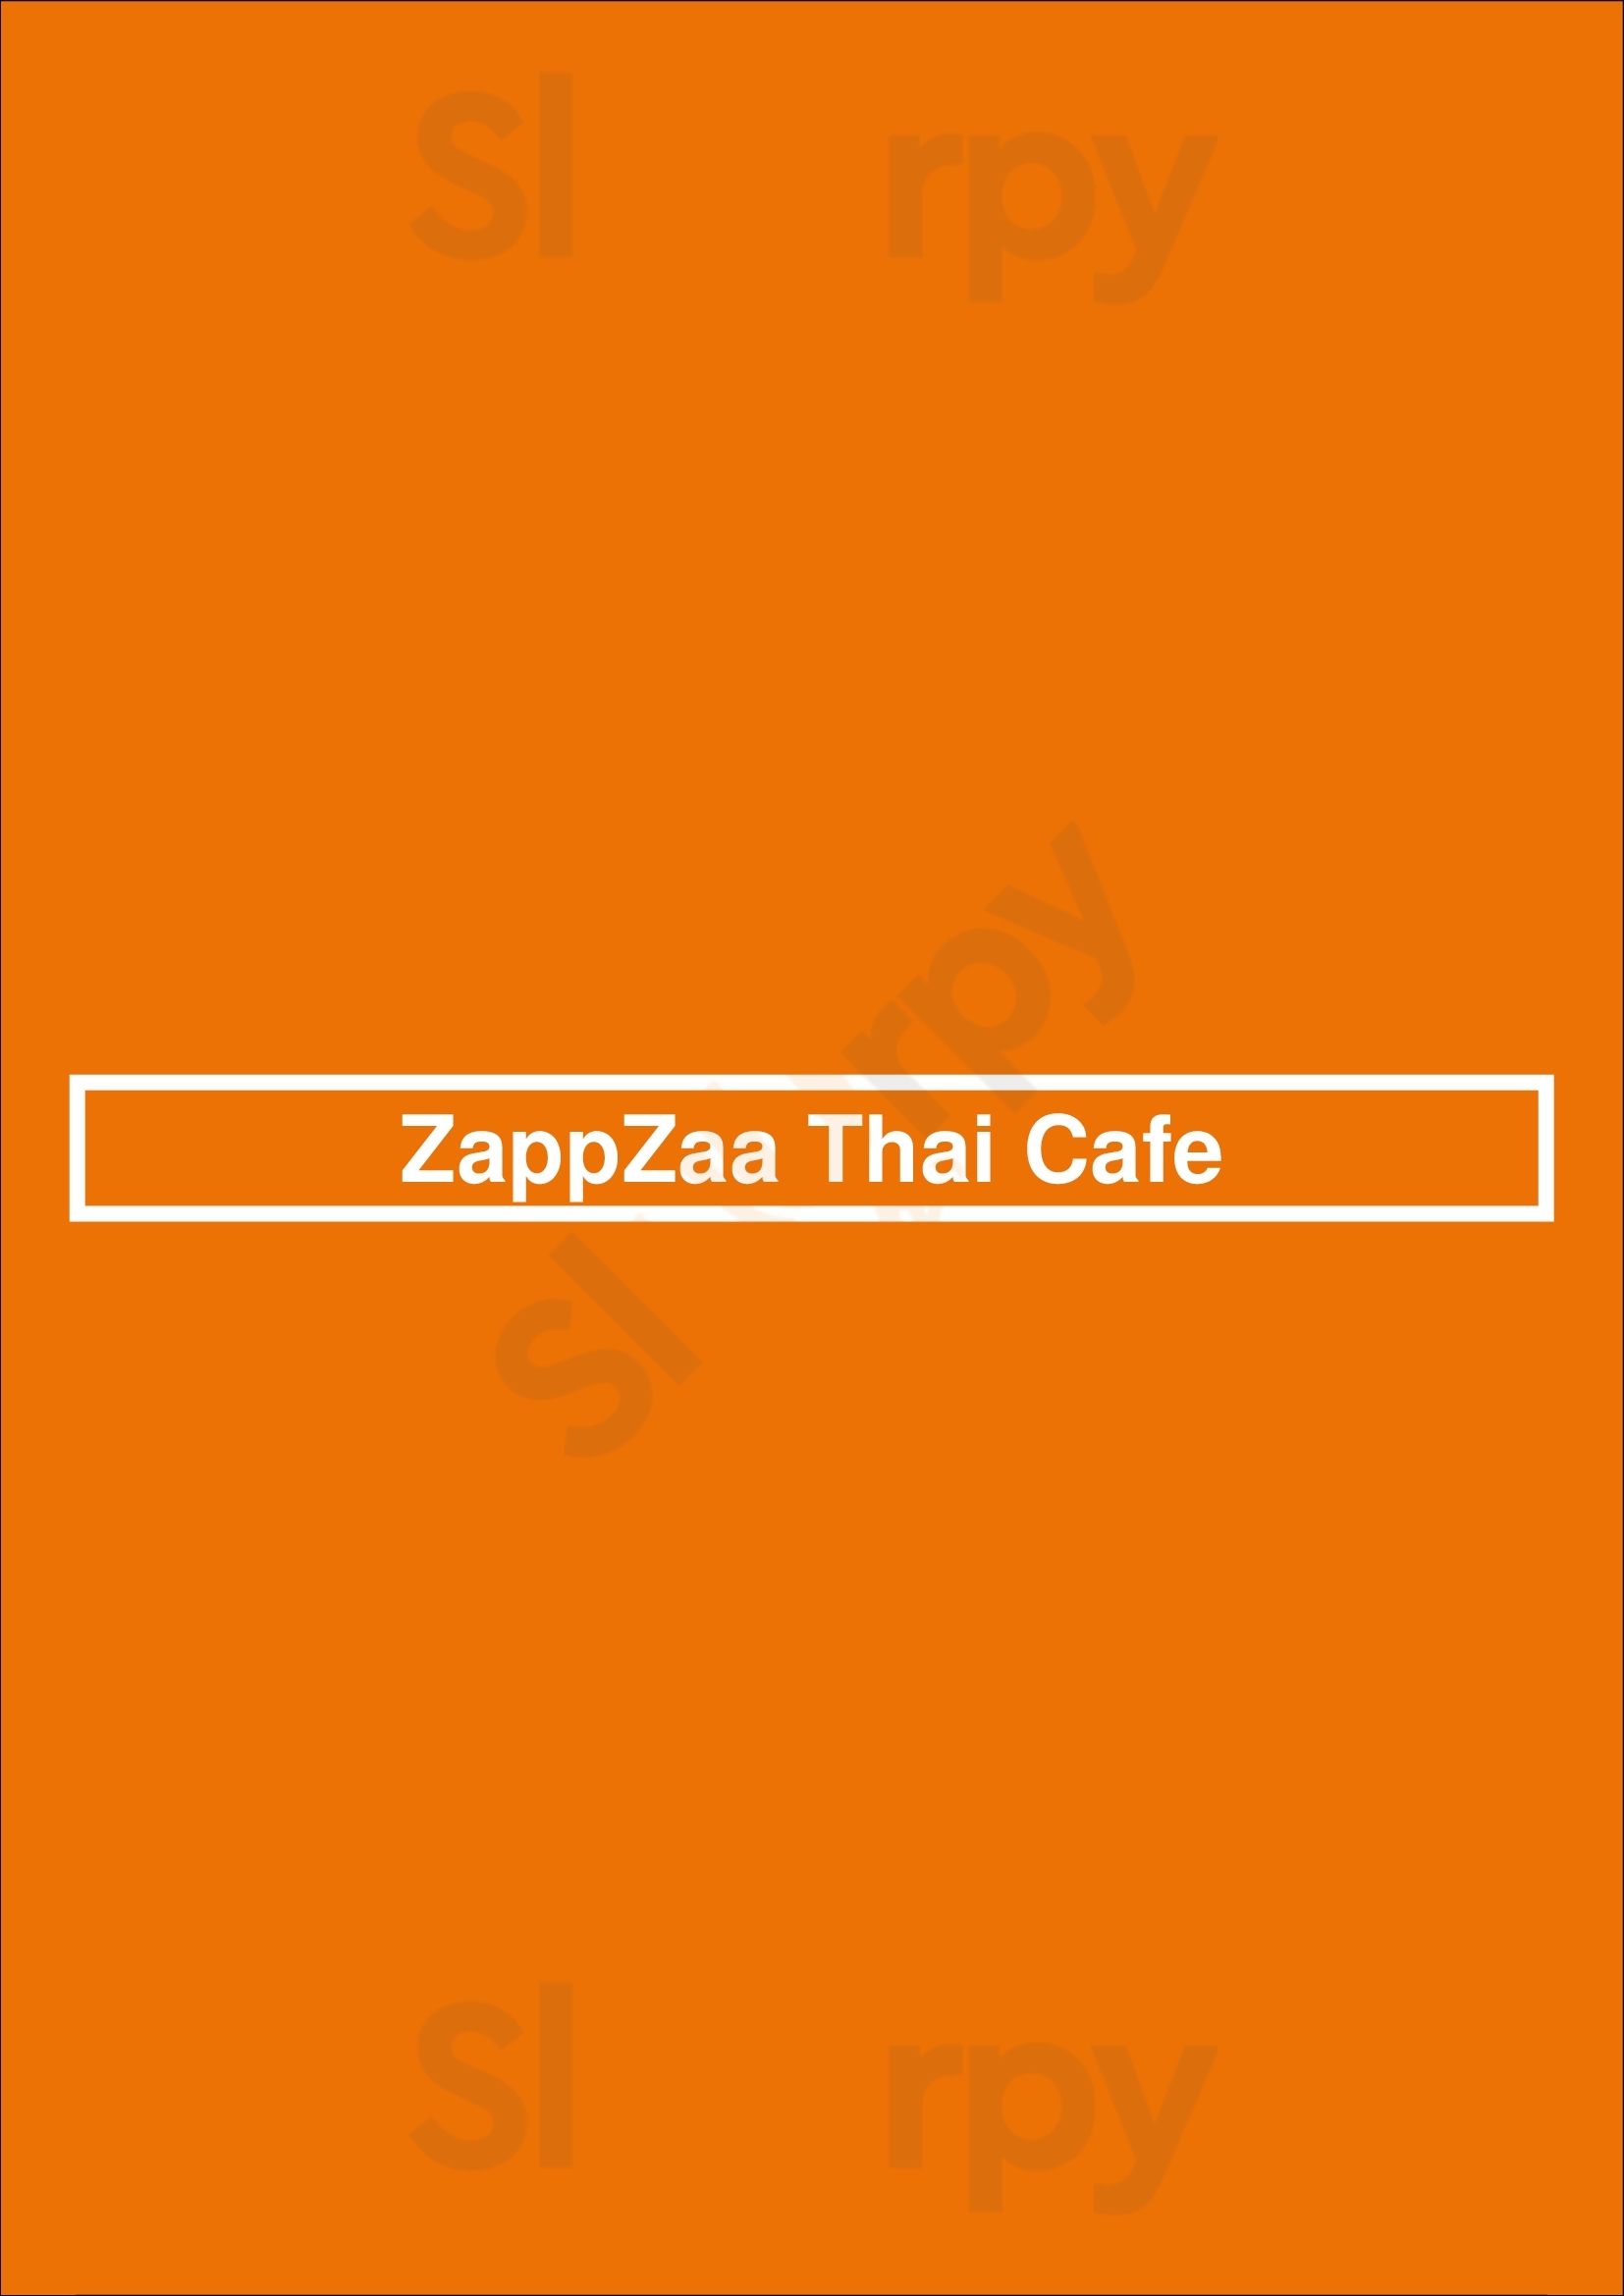 Zappzaa Thai Cafe London Menu - 1